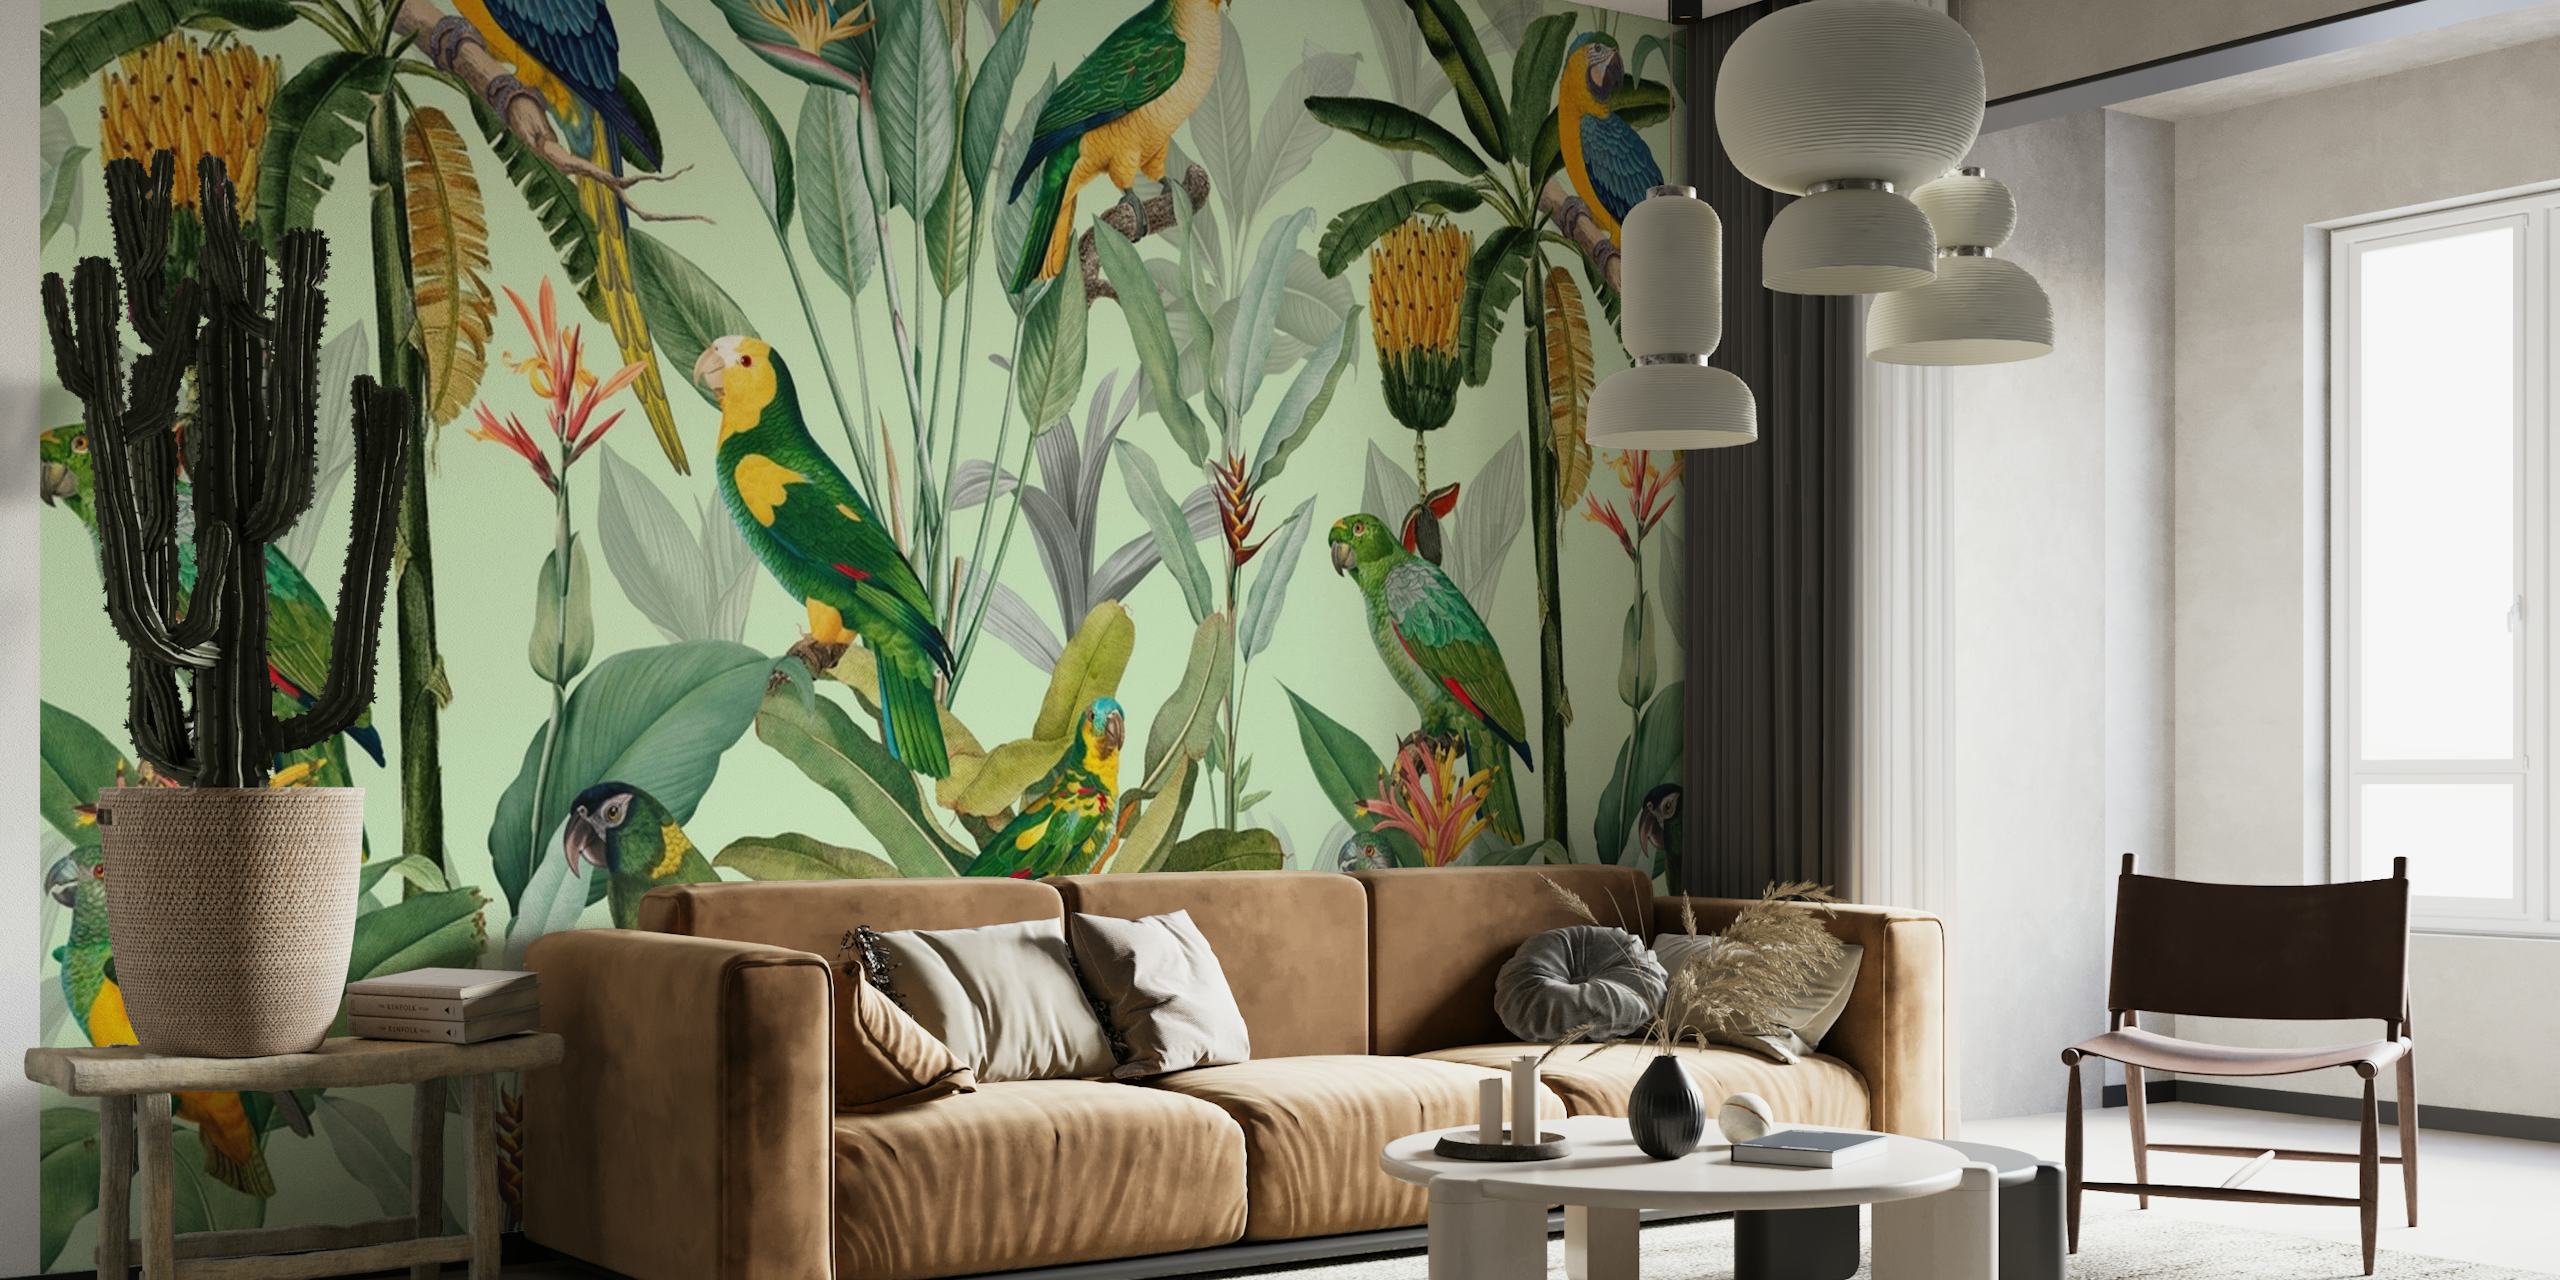 Bananas and Parrots Jungle wallpaper